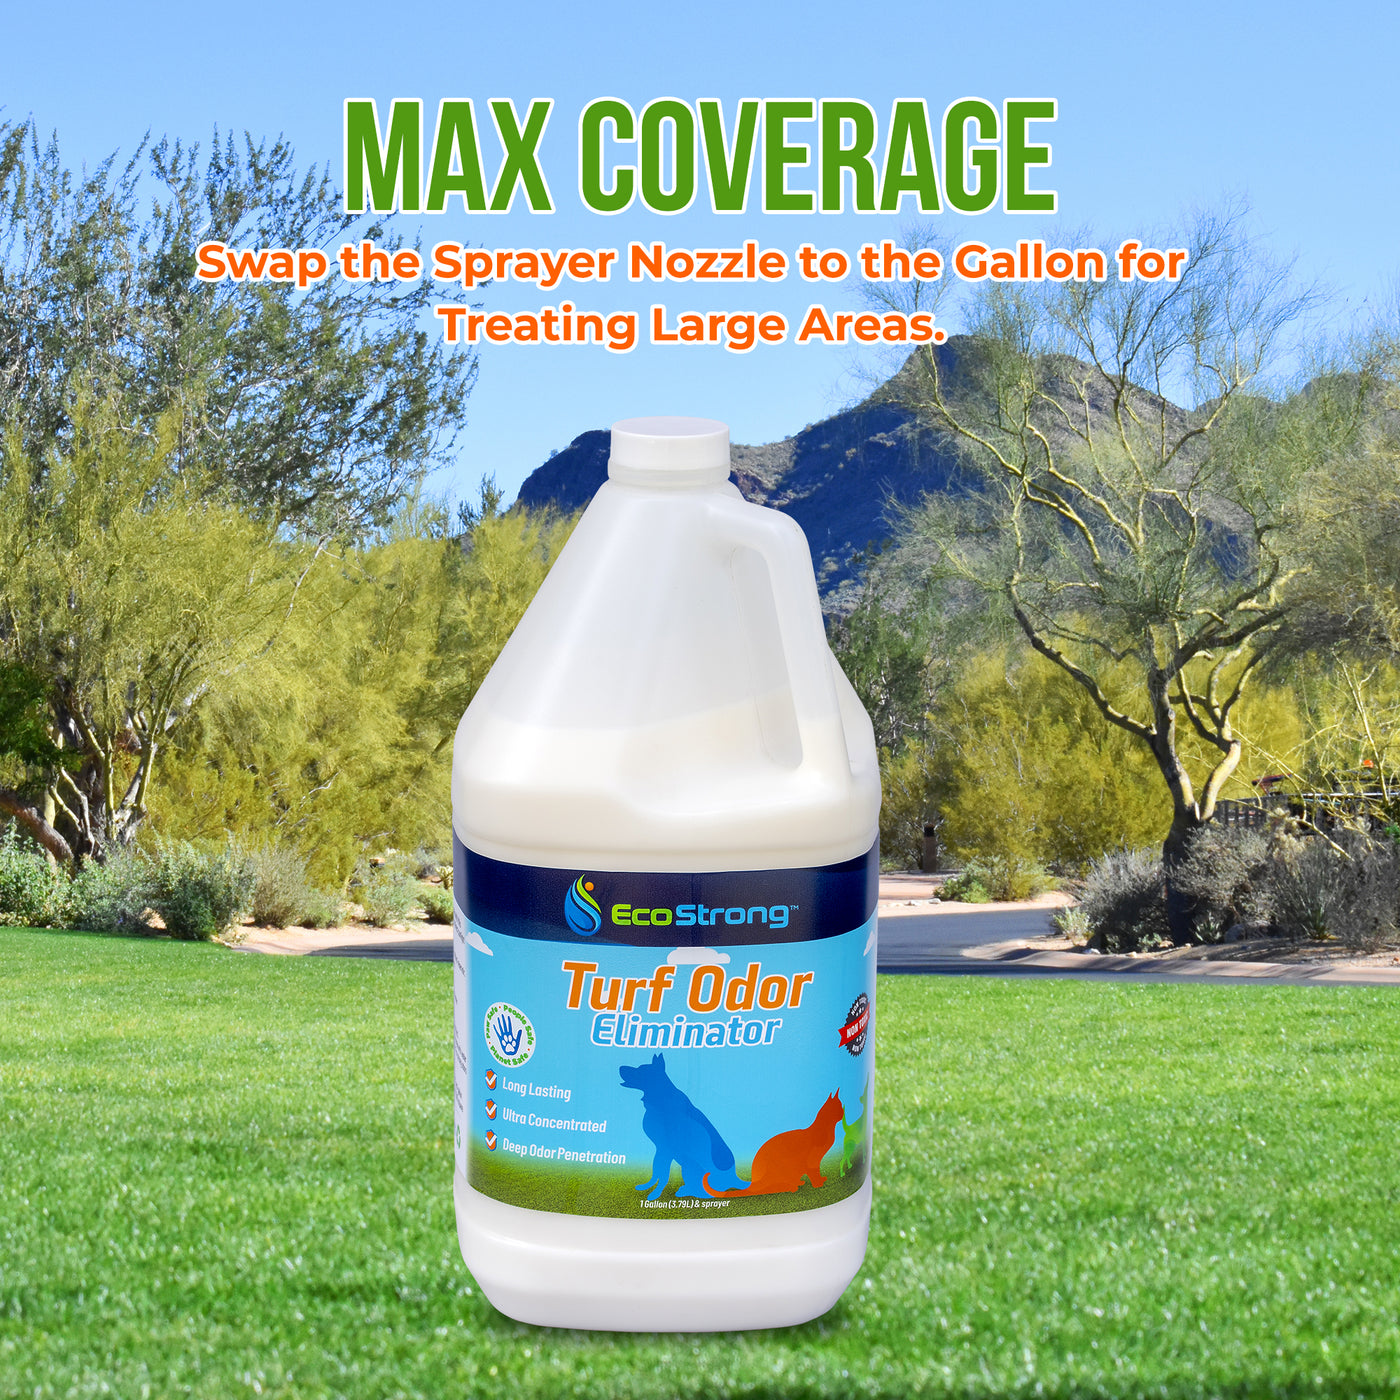 EcoStrong Turf Odor Eliminator#size_32-oz-hose-end-sprayer-bottle-and-1-gallon-jug